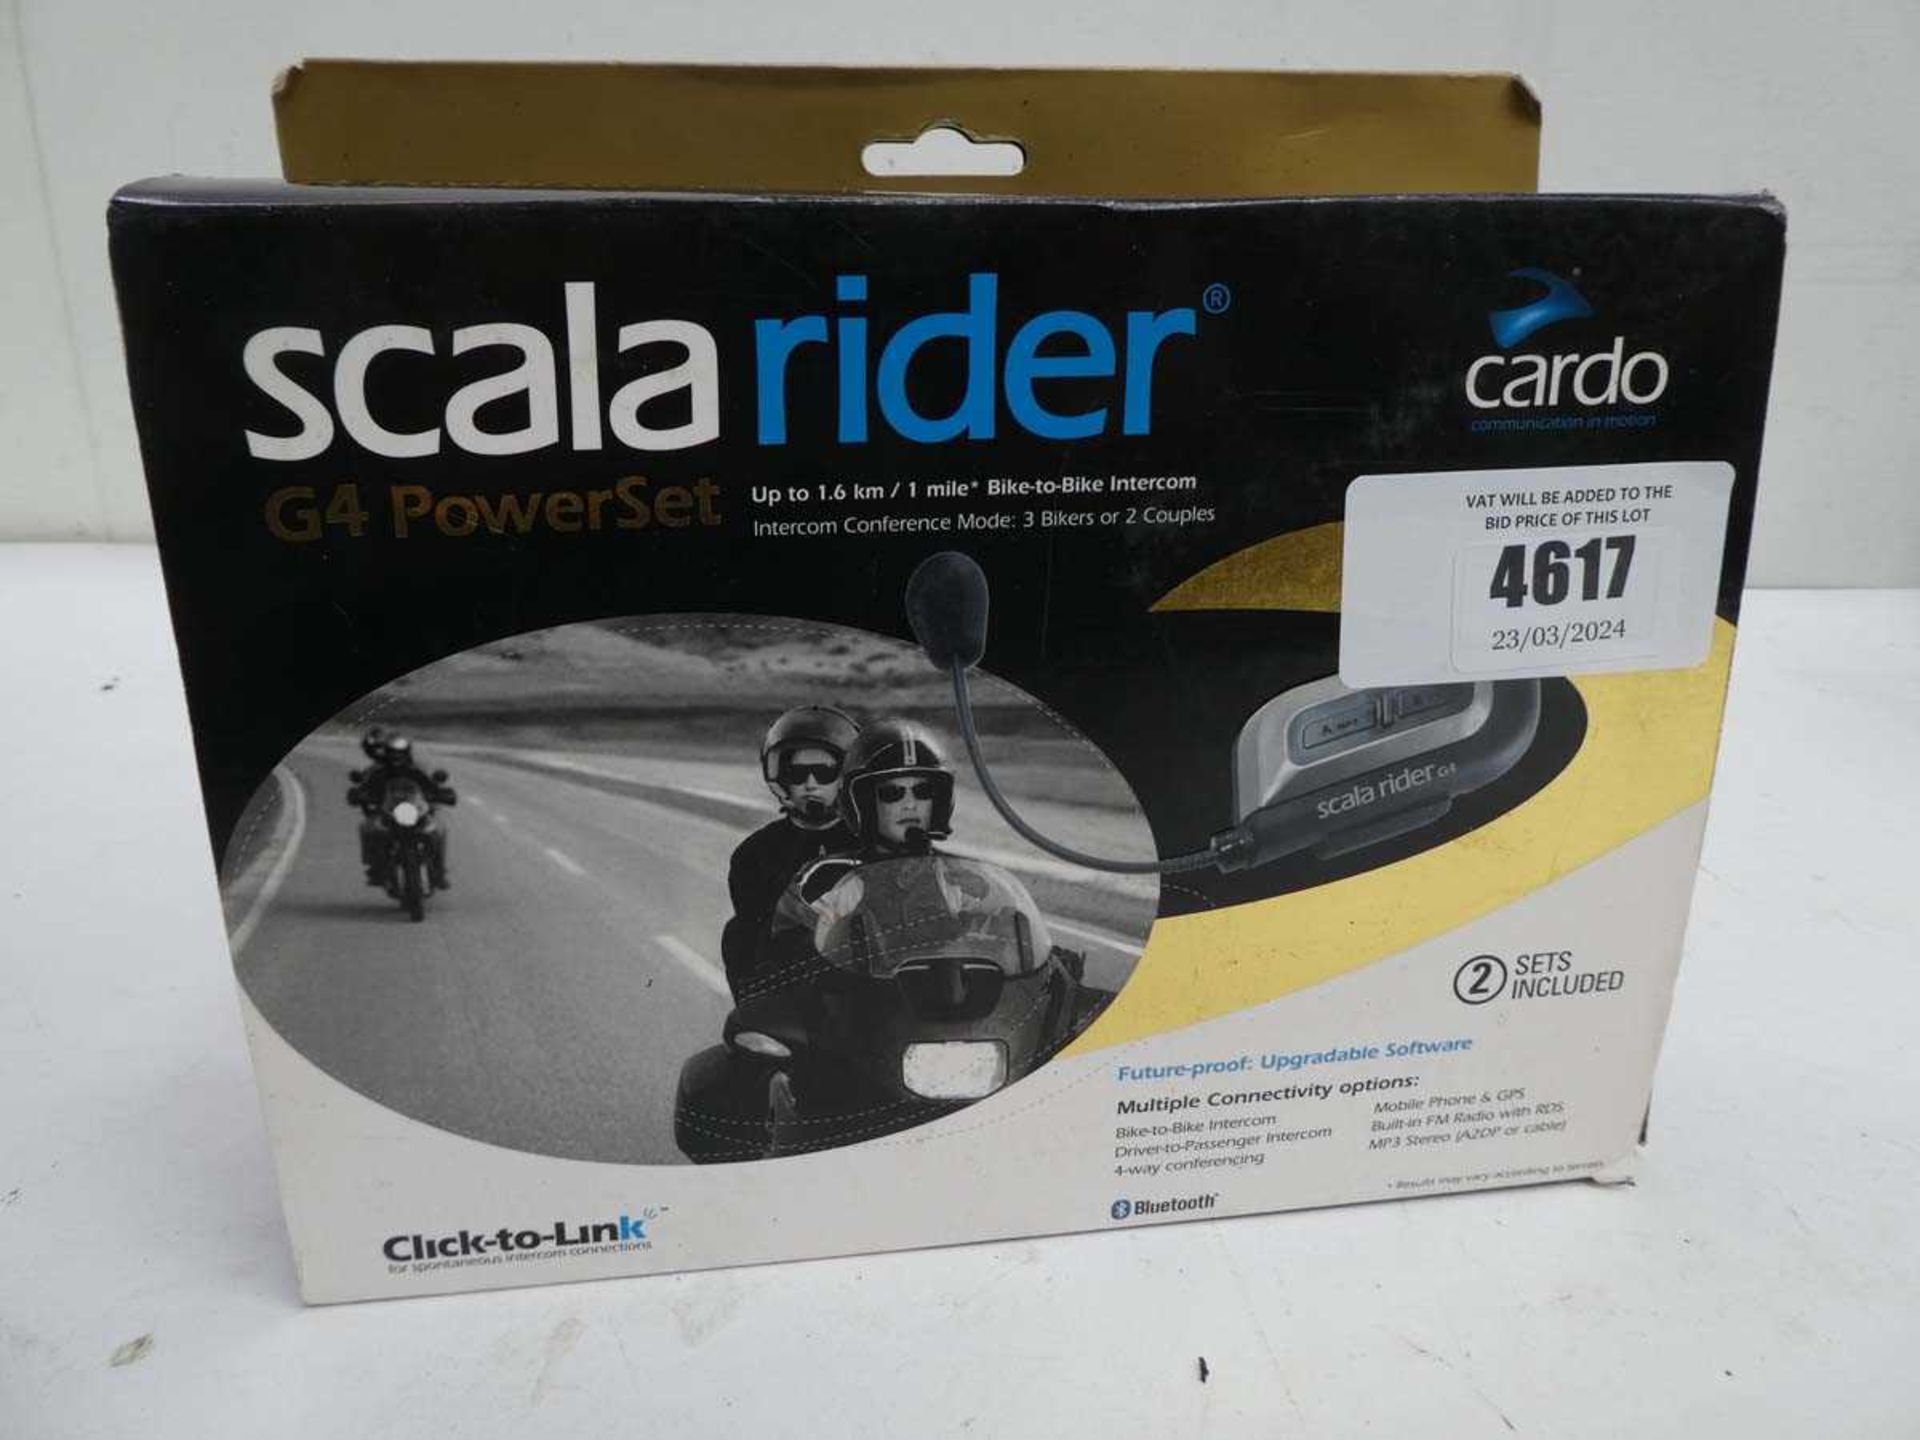 +VAT Cardo Scala Rider G4 powerset motorbike intercom set